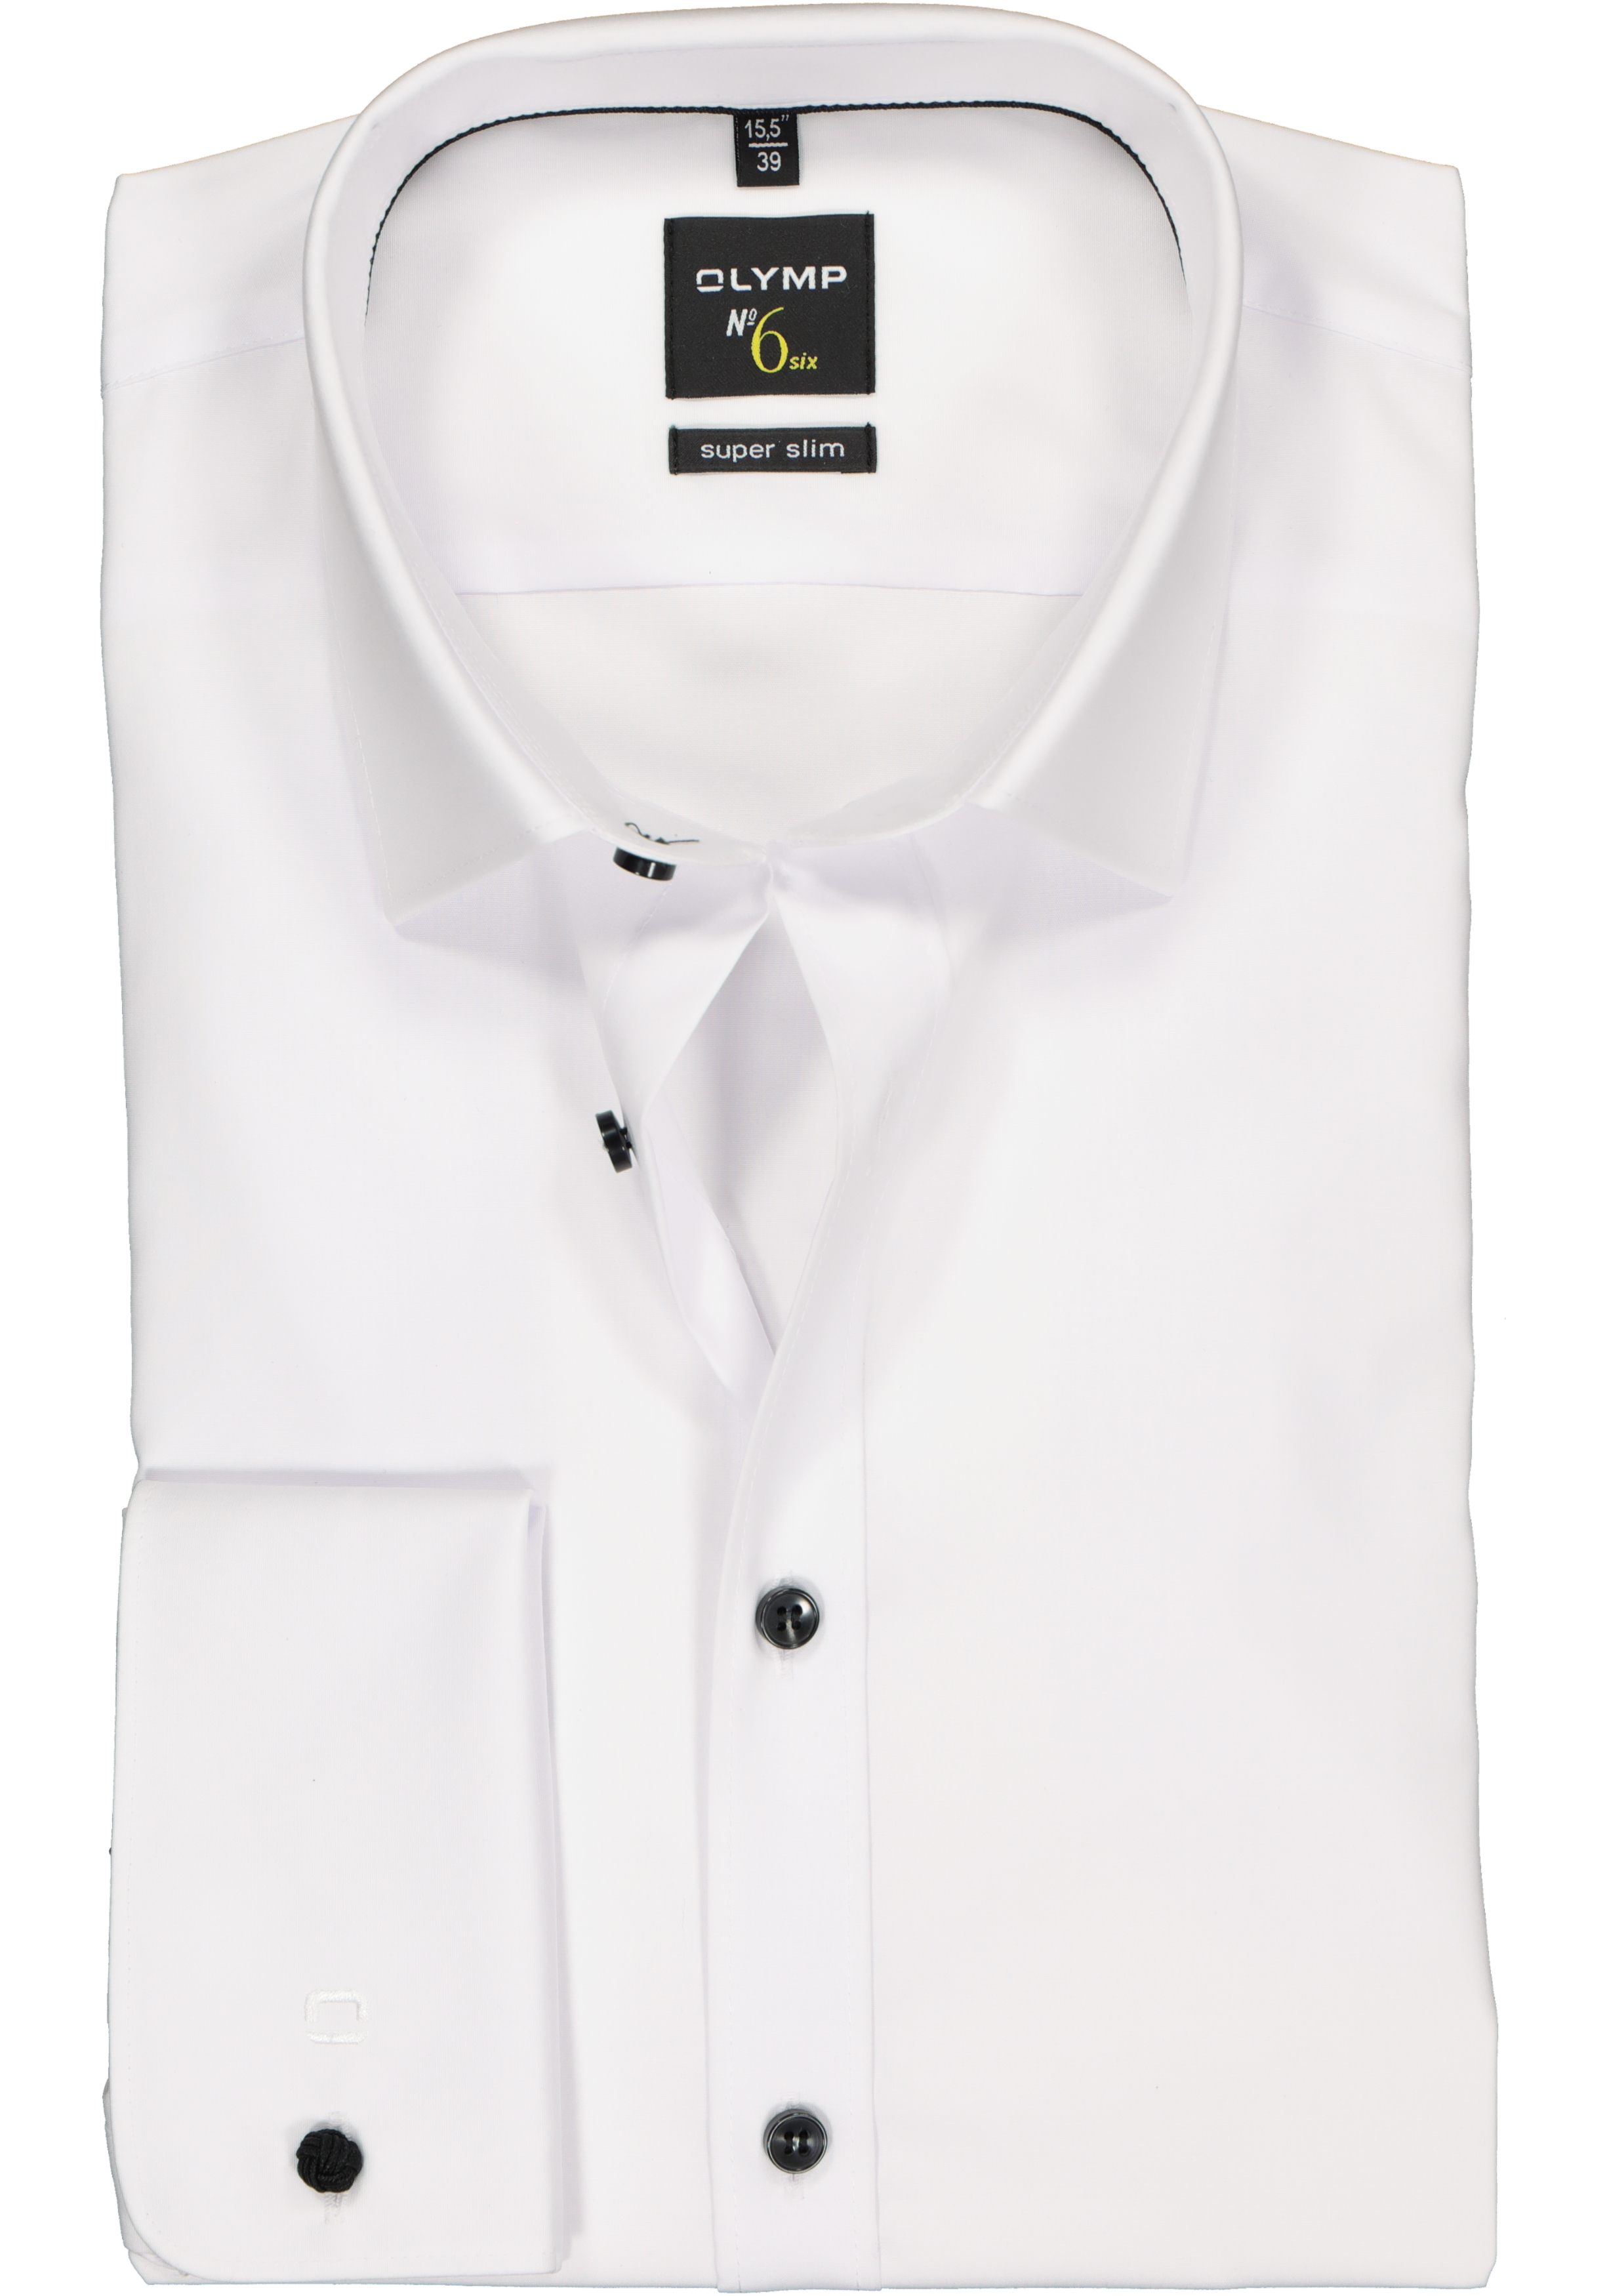 OLYMP No. Six super slim fit overhemd, dubbele manchet, wit met zwarte knoopjes 